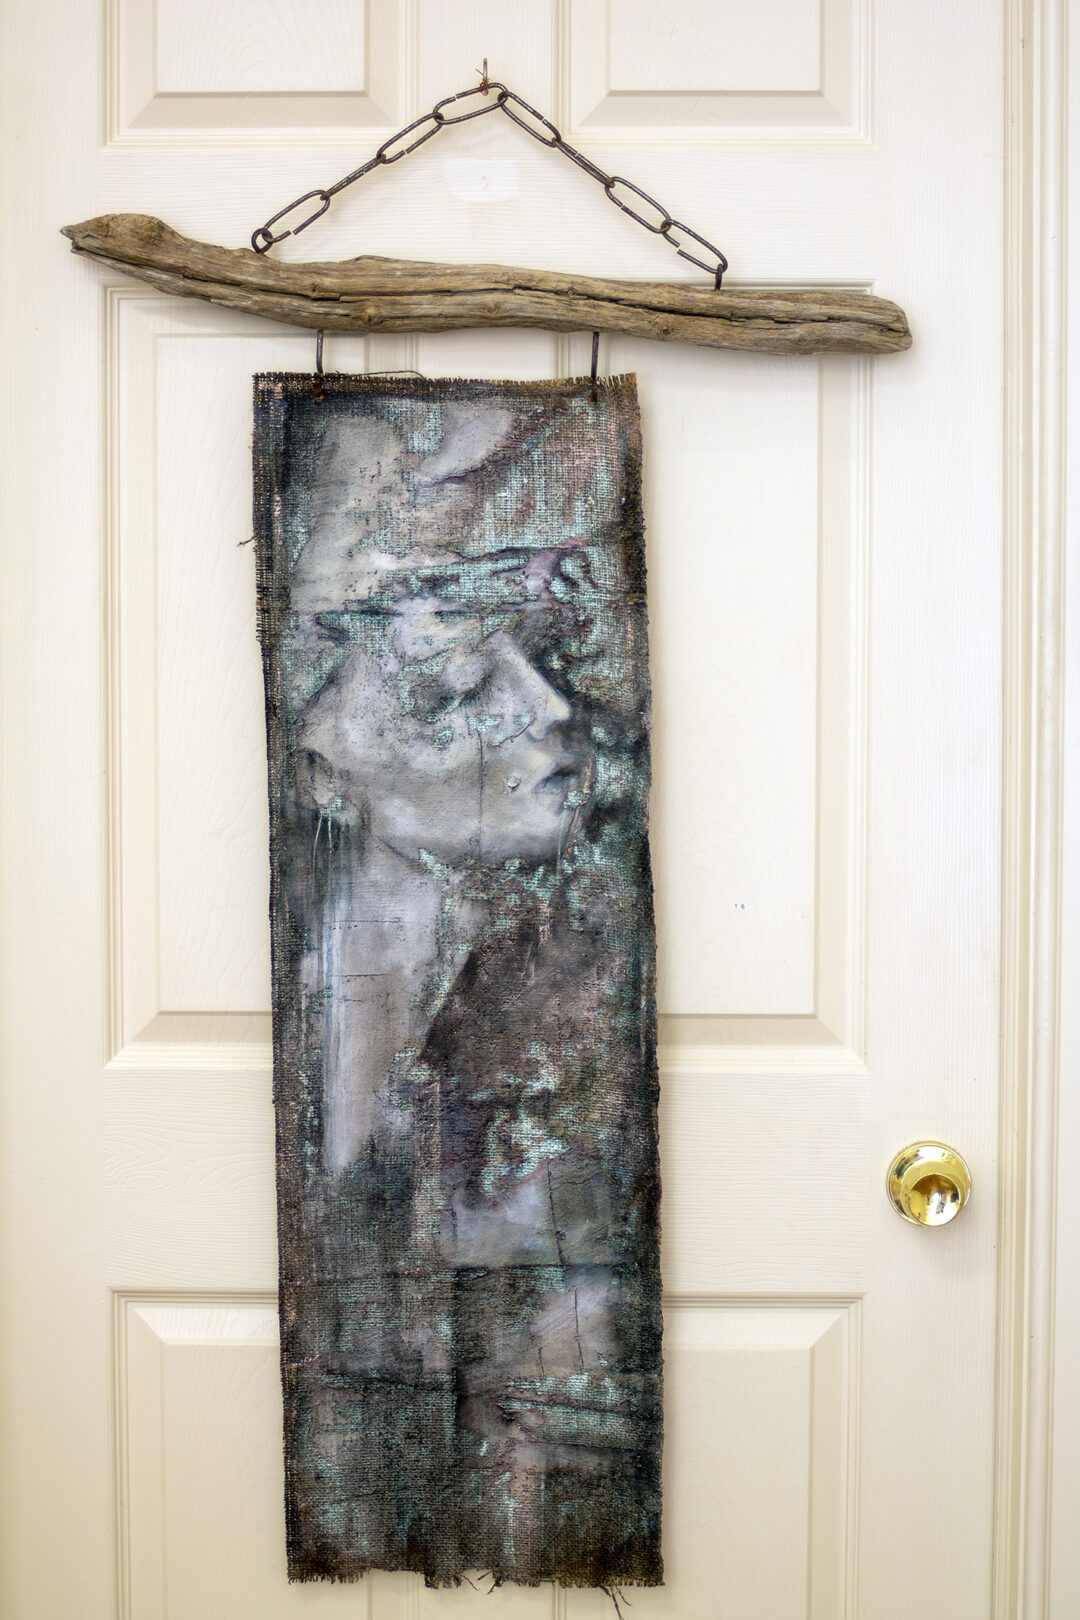 Andrea McKenna “Undercurrent” acrylic over limestone plaster on burlap, $900.00